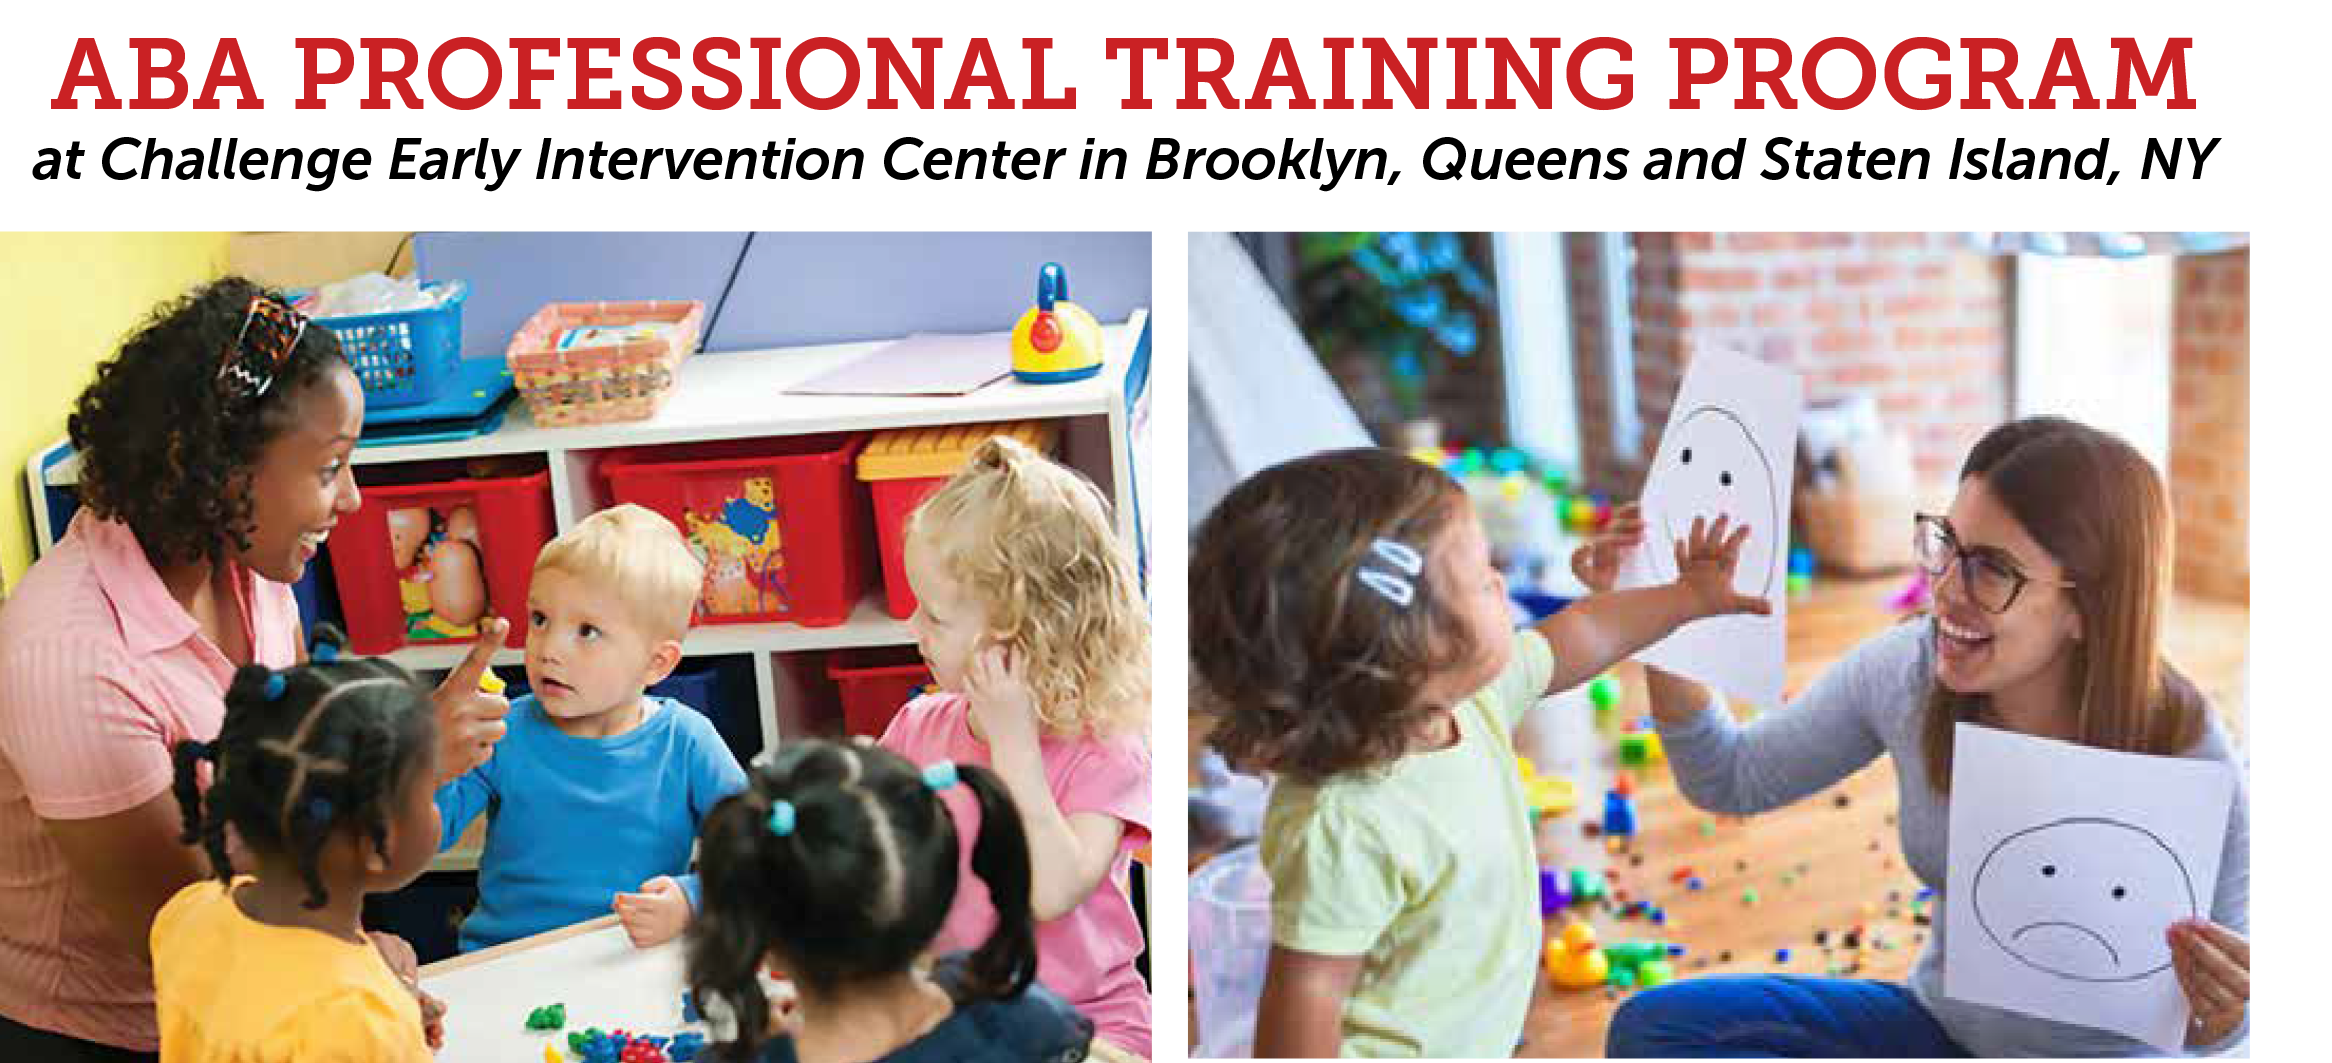 ABA Professional Training Program